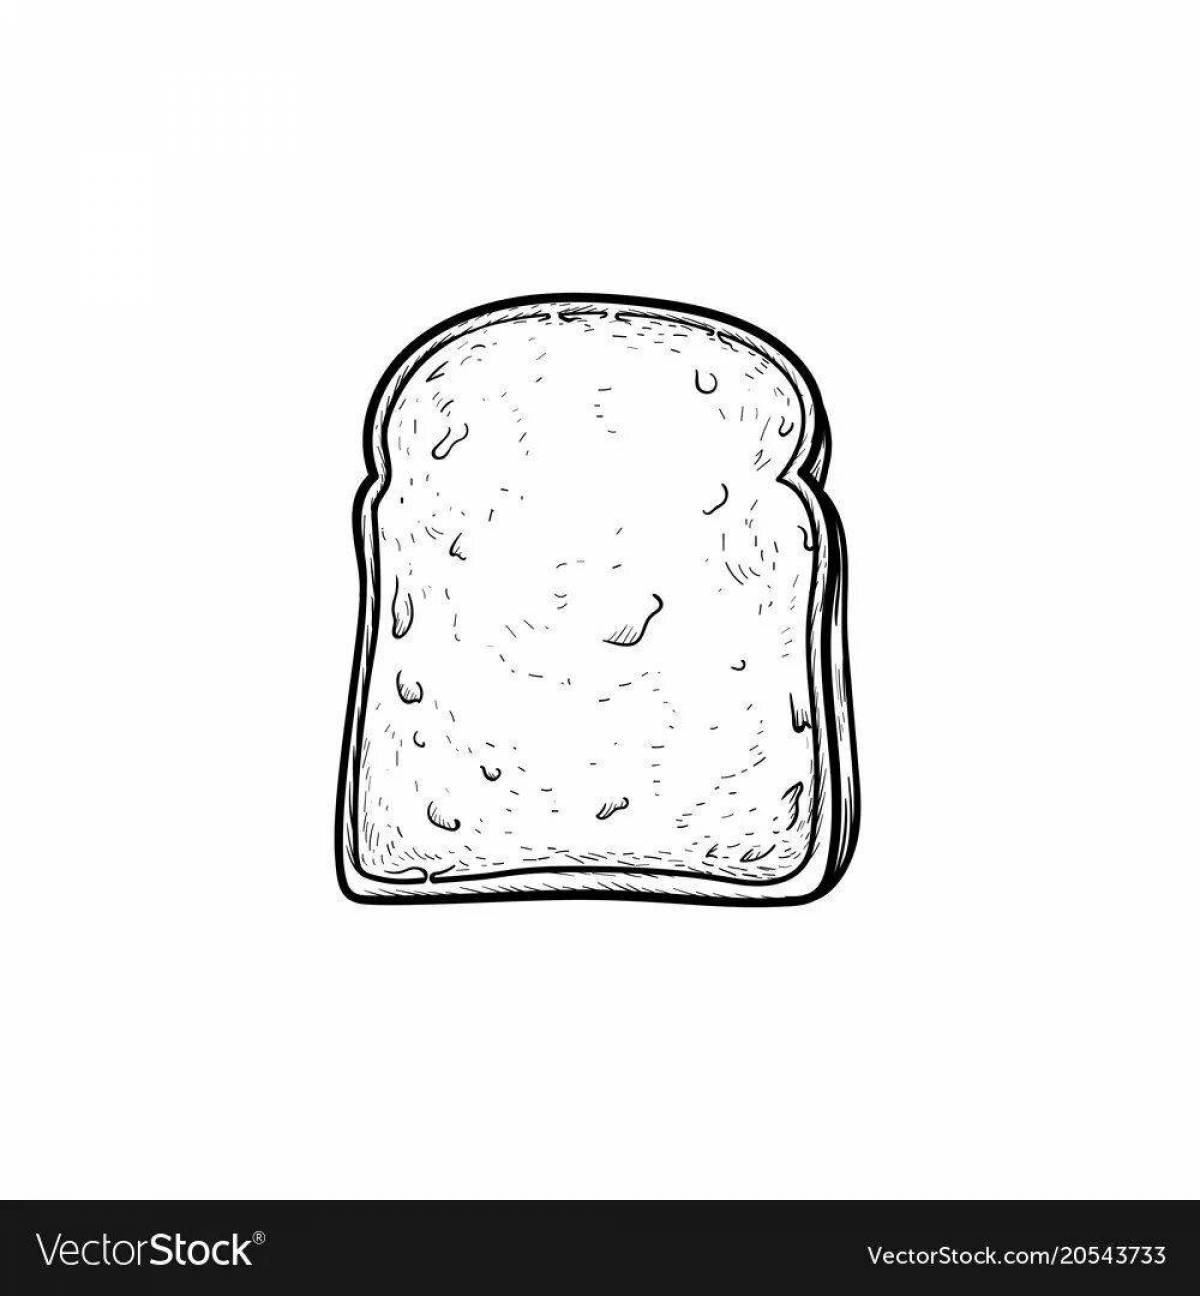 Coloring a piece of bread